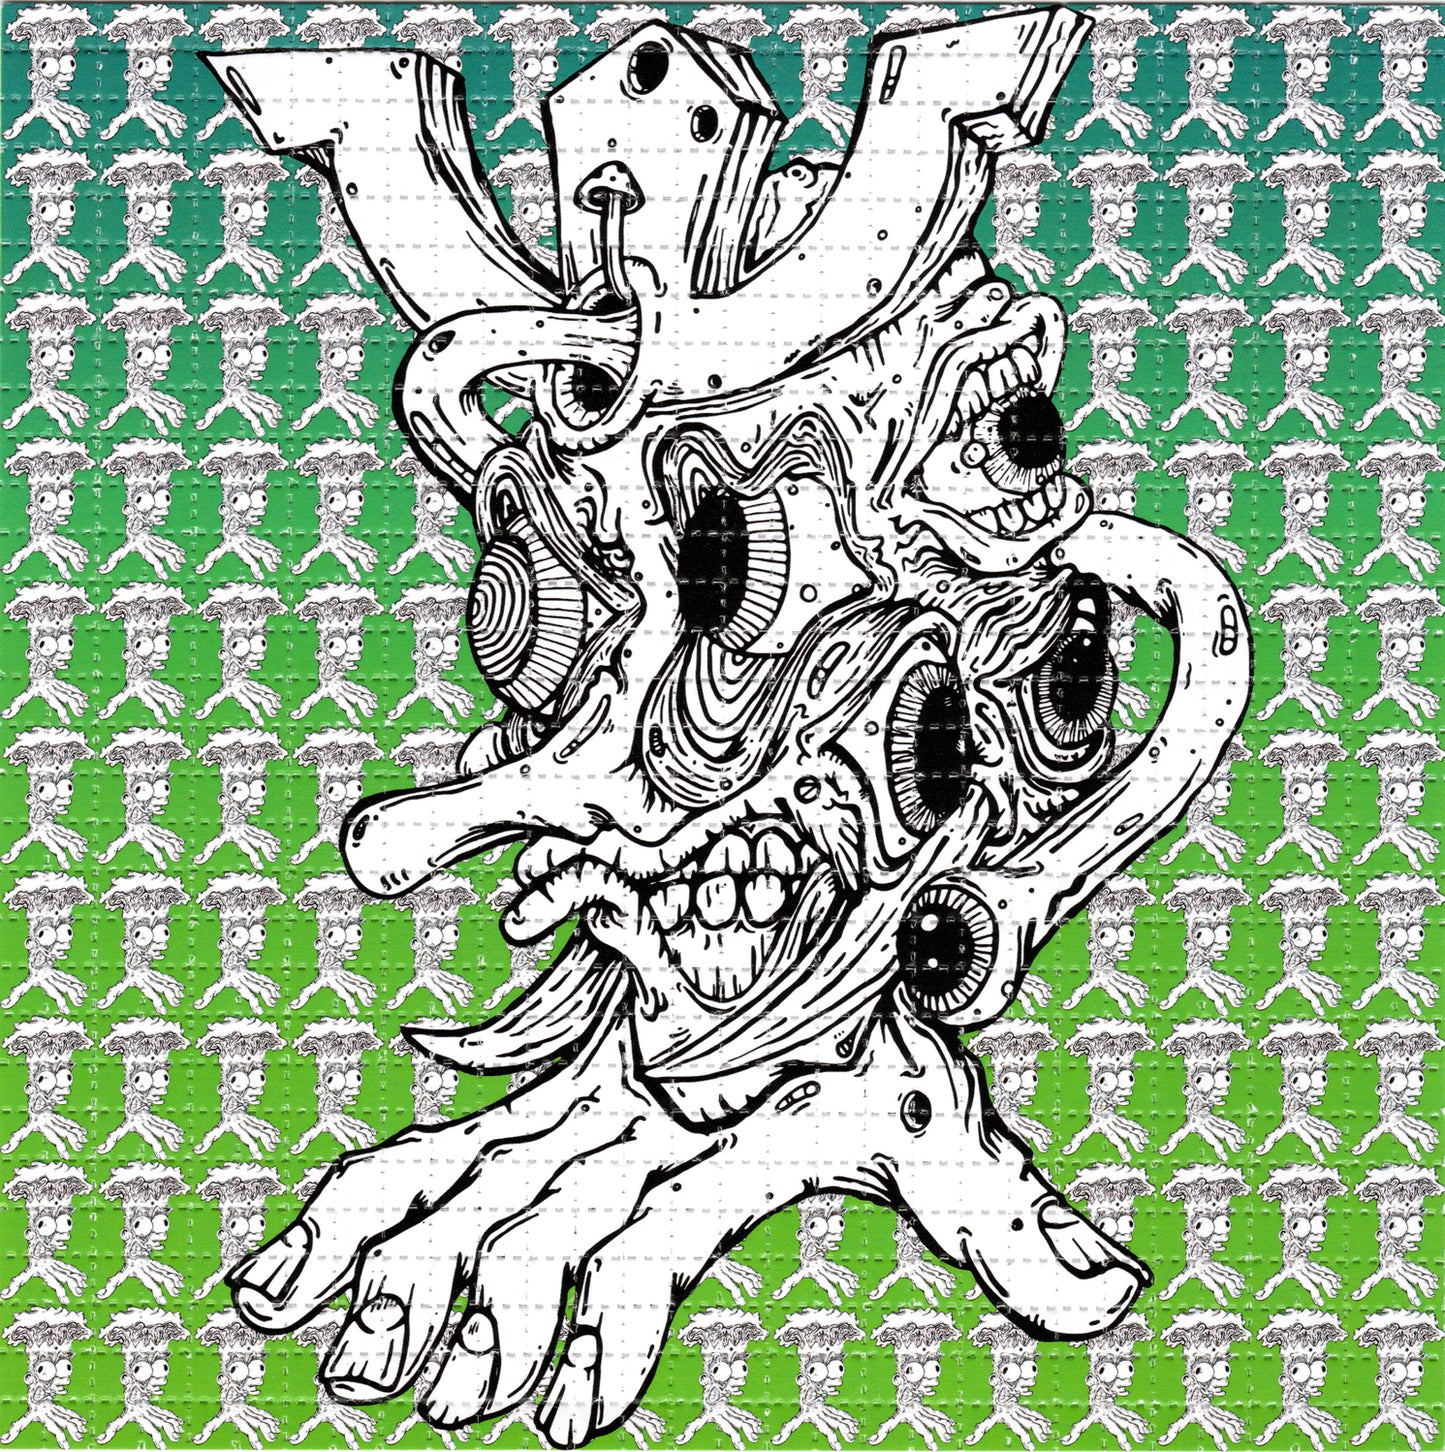 Handmurai & Bart by Benjamin Santos SIGNED Limited Edition LSD blotter art print